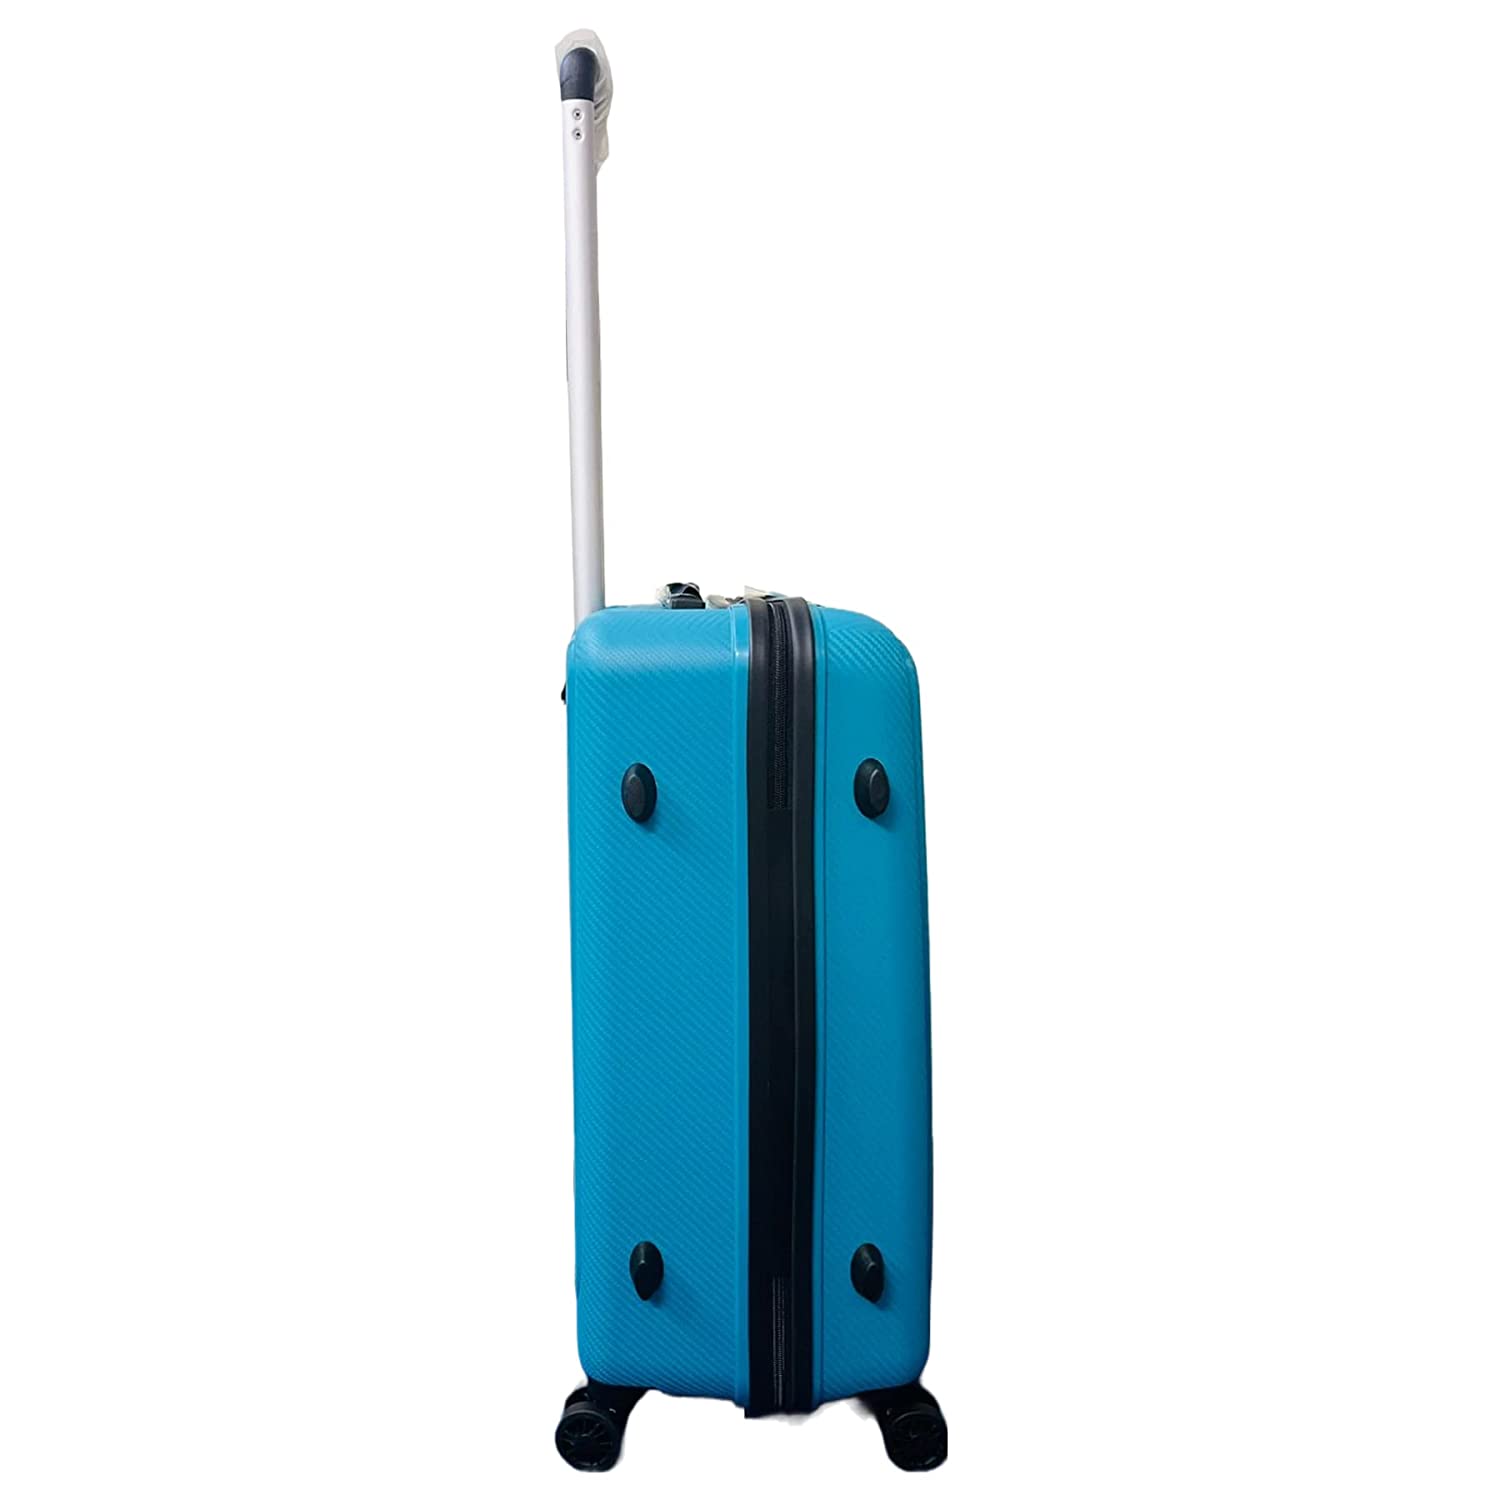 OMASKA luggage bag supplier OEM ODM| Alibaba.com